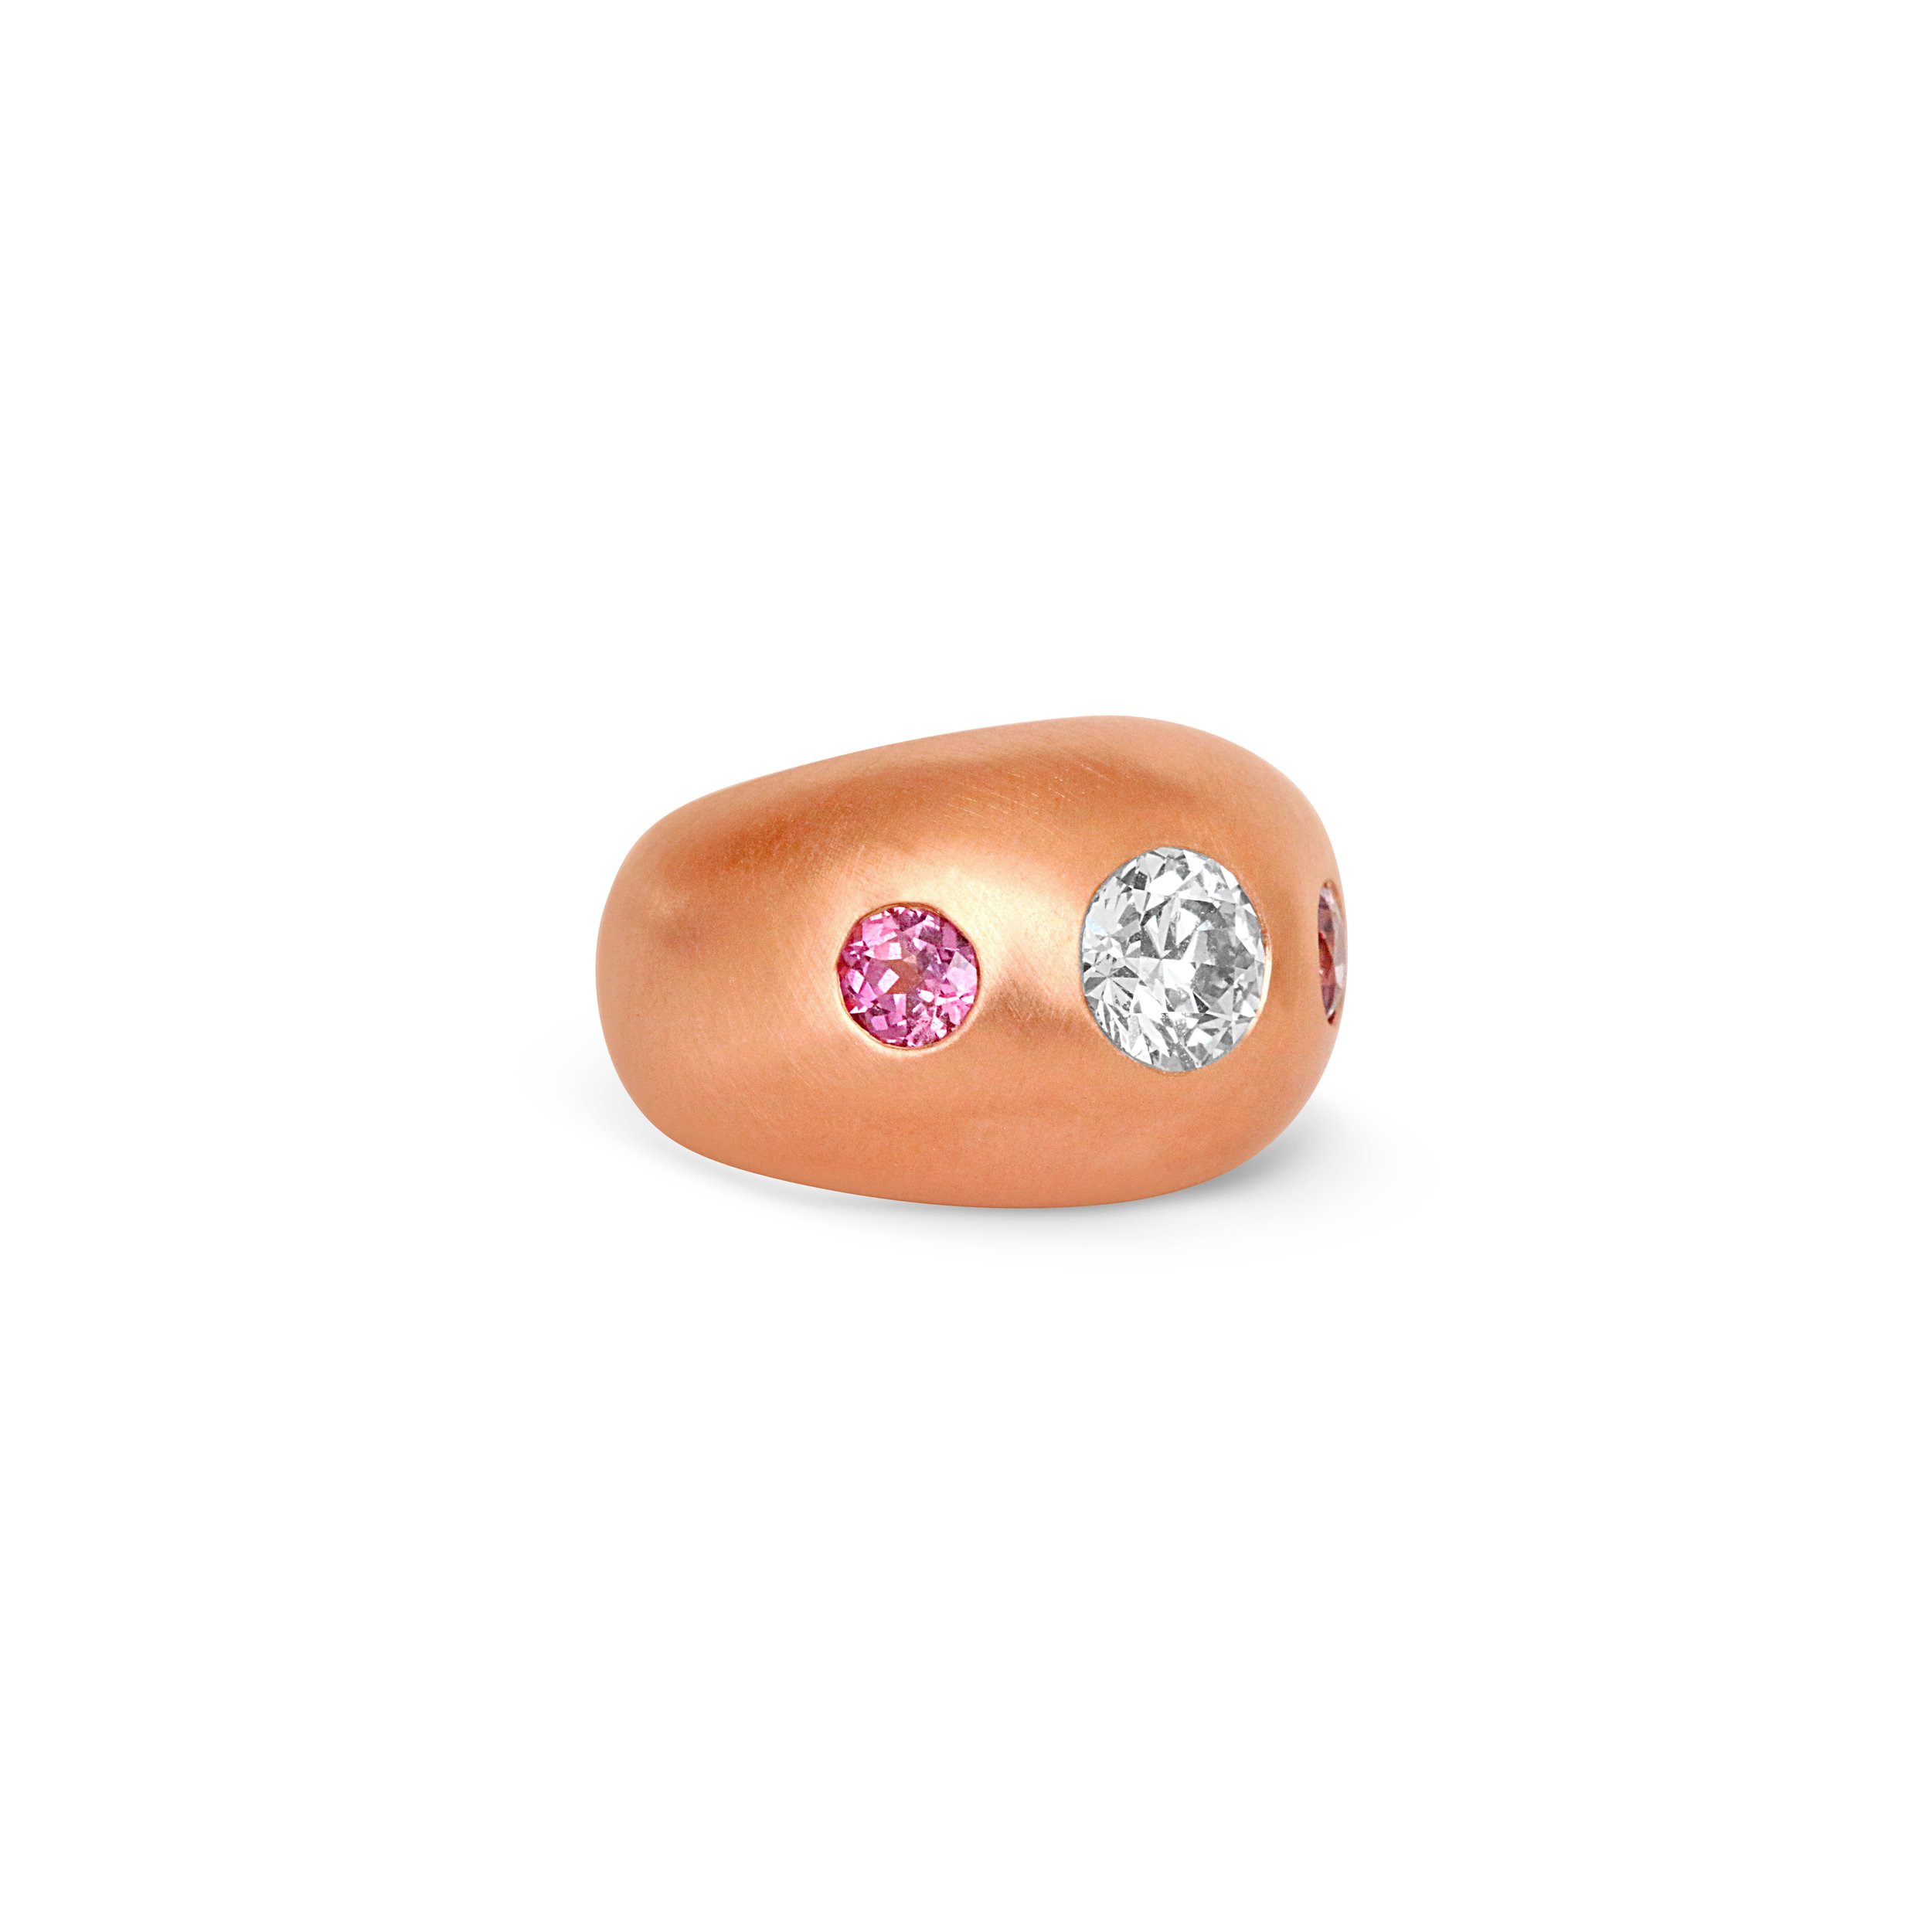 B 1.59 ct Diamond Pink Sapphire Ring.jpg